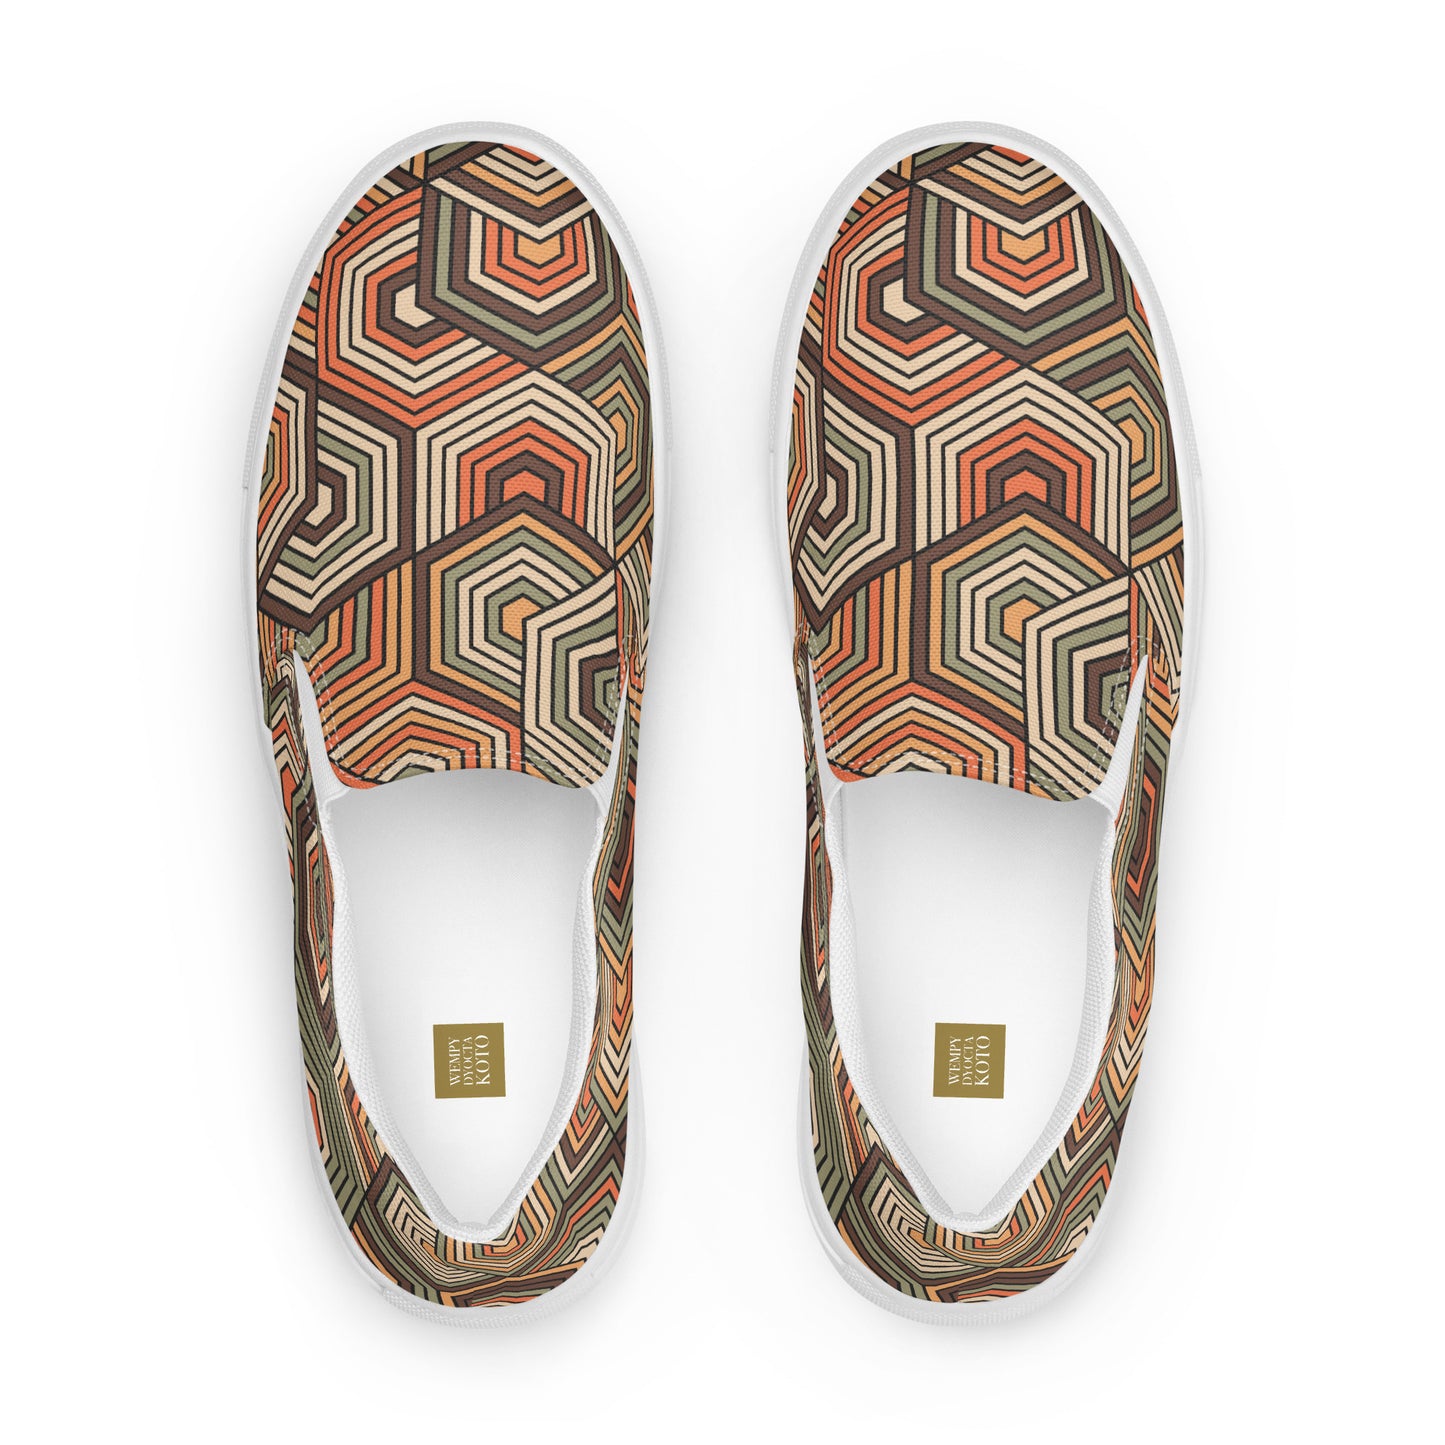 Hexagonal Retro Pattern - Women’s slip-on canvas shoes